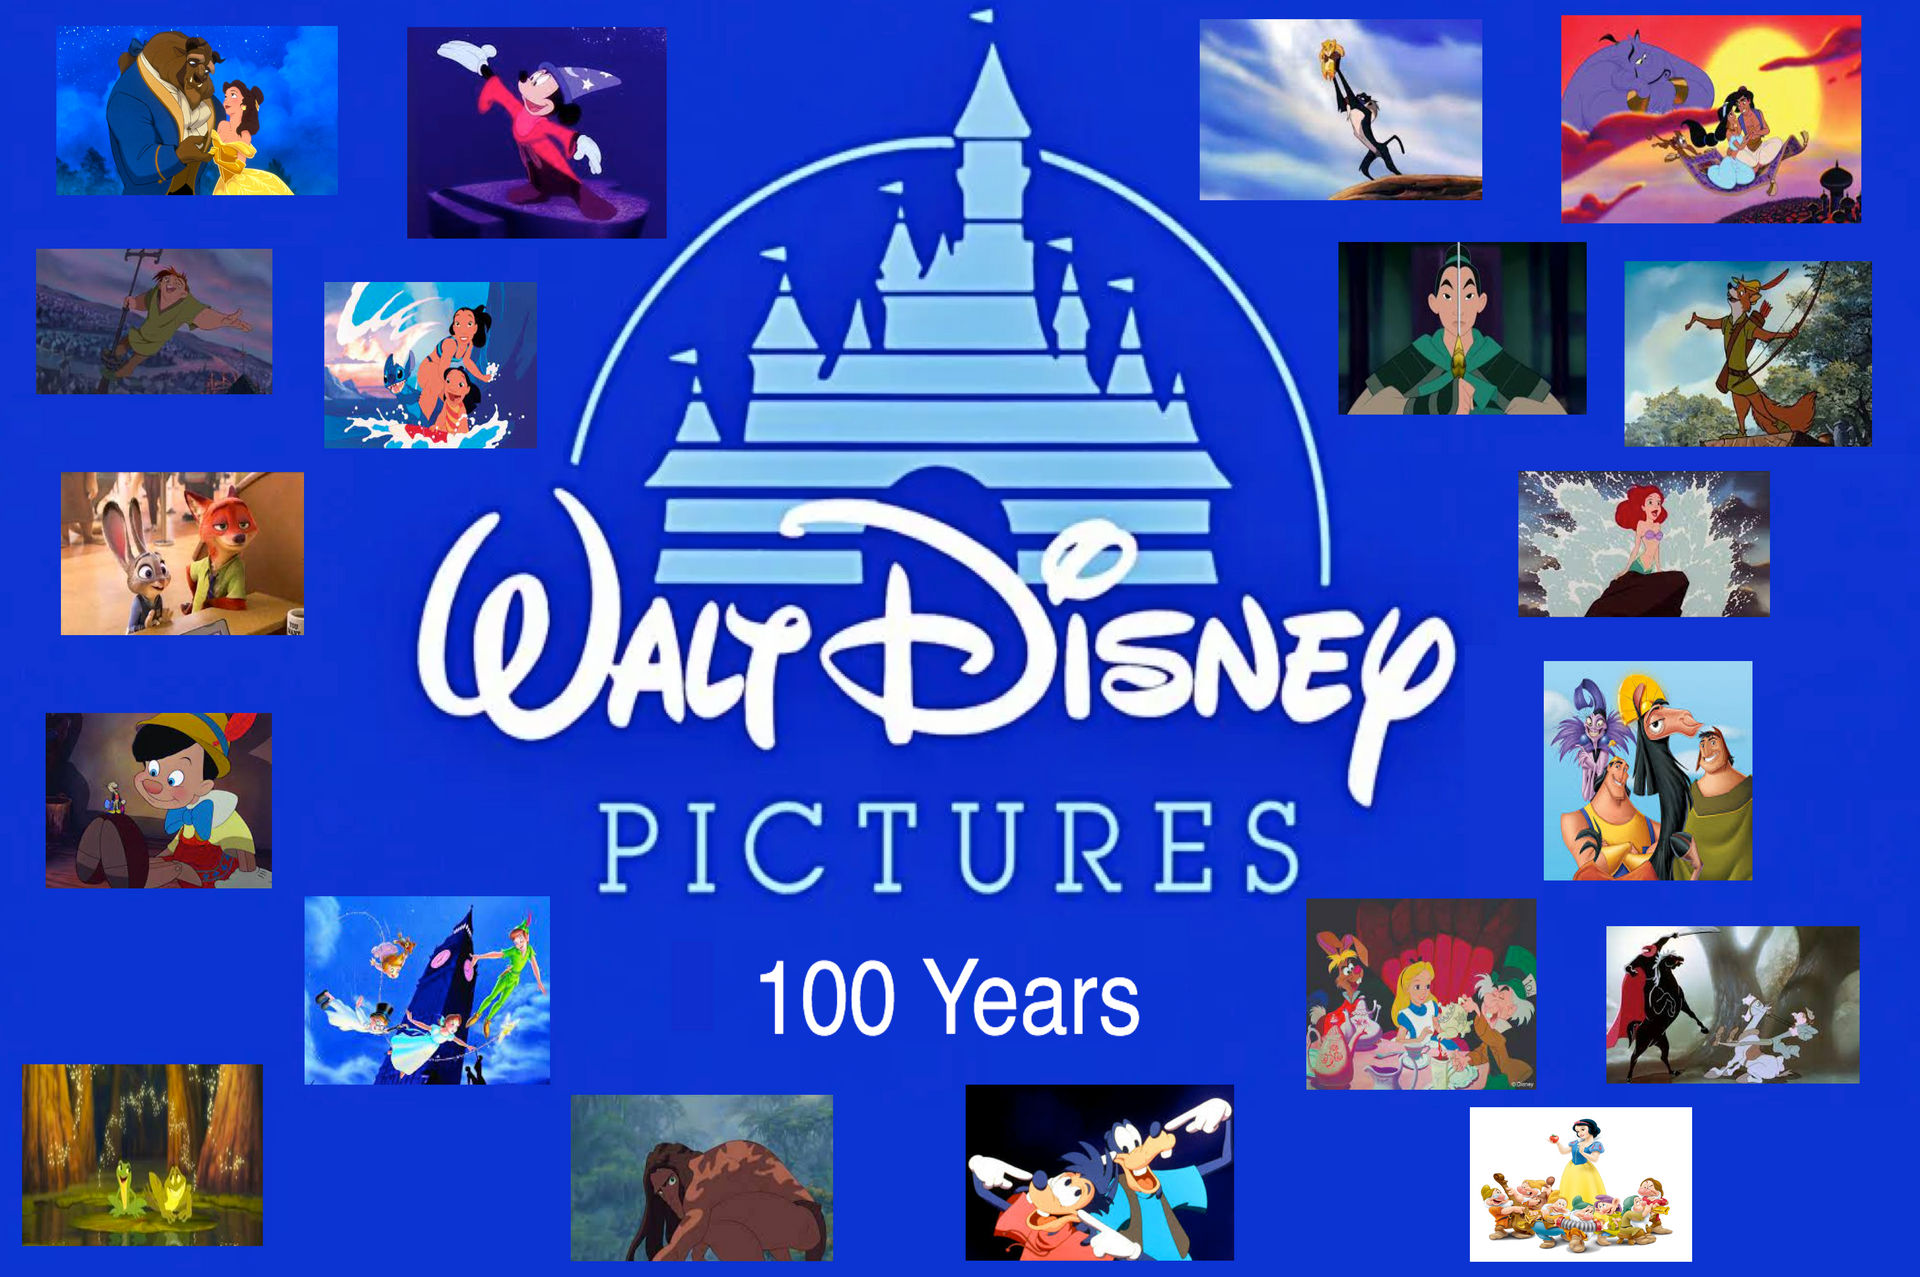 Disney 100 Years of Wonder by JustinAdventures on DeviantArt